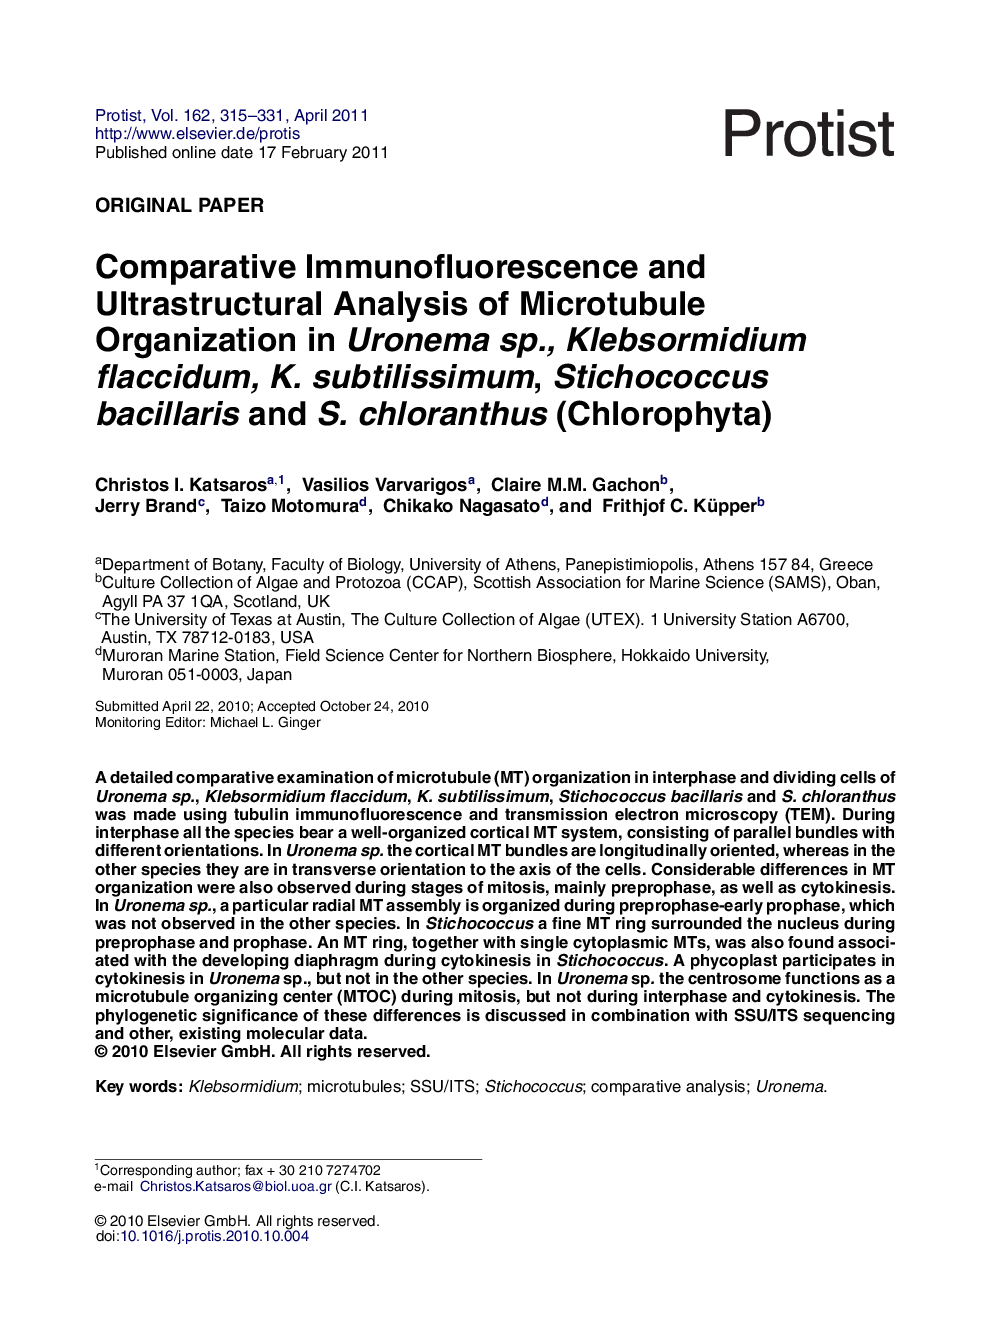 Comparative Immunofluorescence and Ultrastructural Analysis of Microtubule Organization in Uronema sp., Klebsormidium flaccidum, K. subtilissimum, Stichococcus bacillaris and S. chloranthus (Chlorophyta)